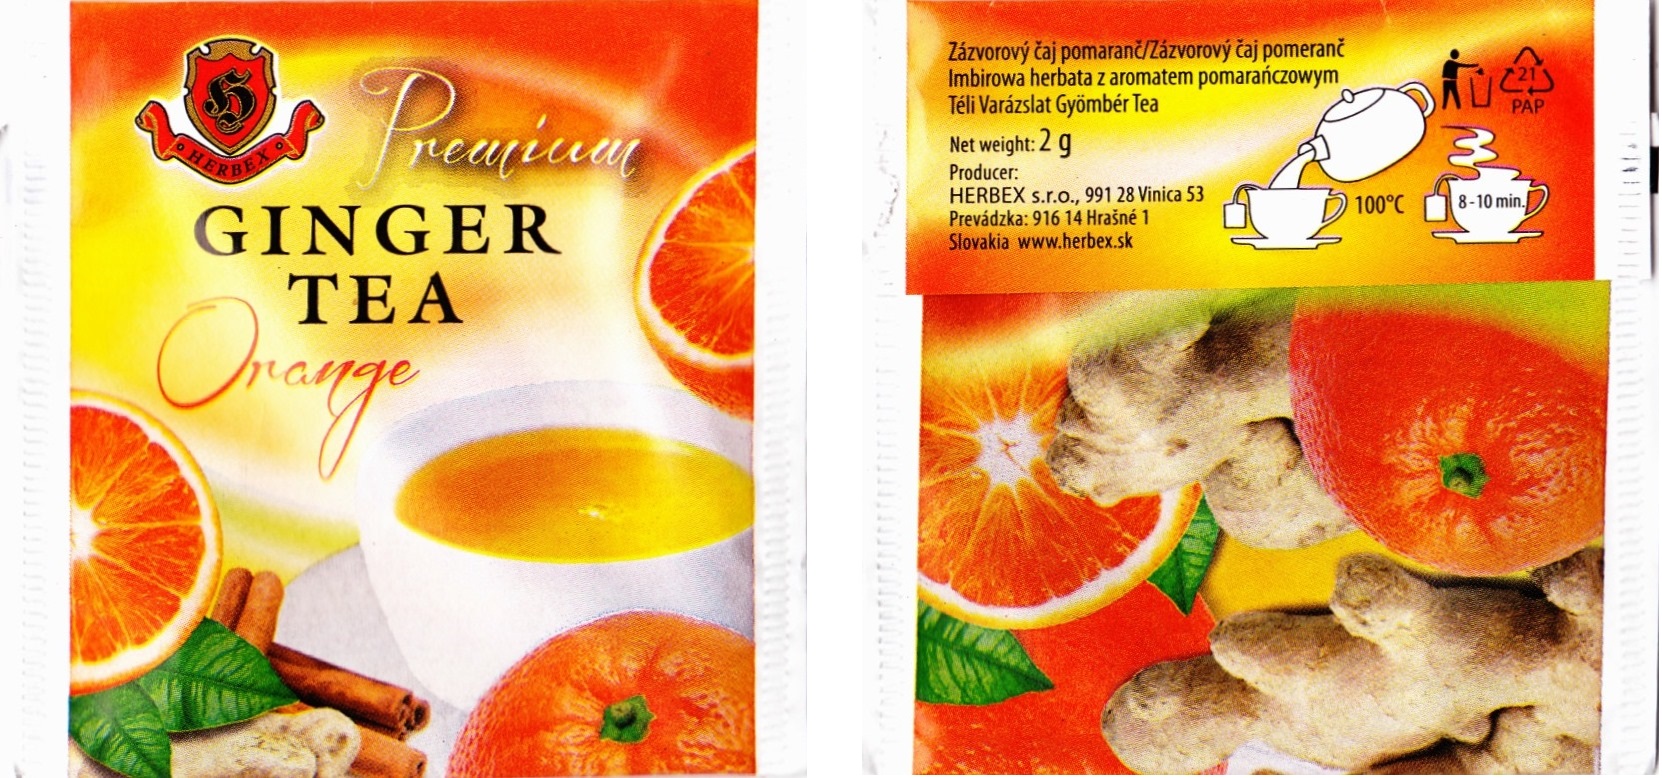 Herbex - Ginger Tea Orange